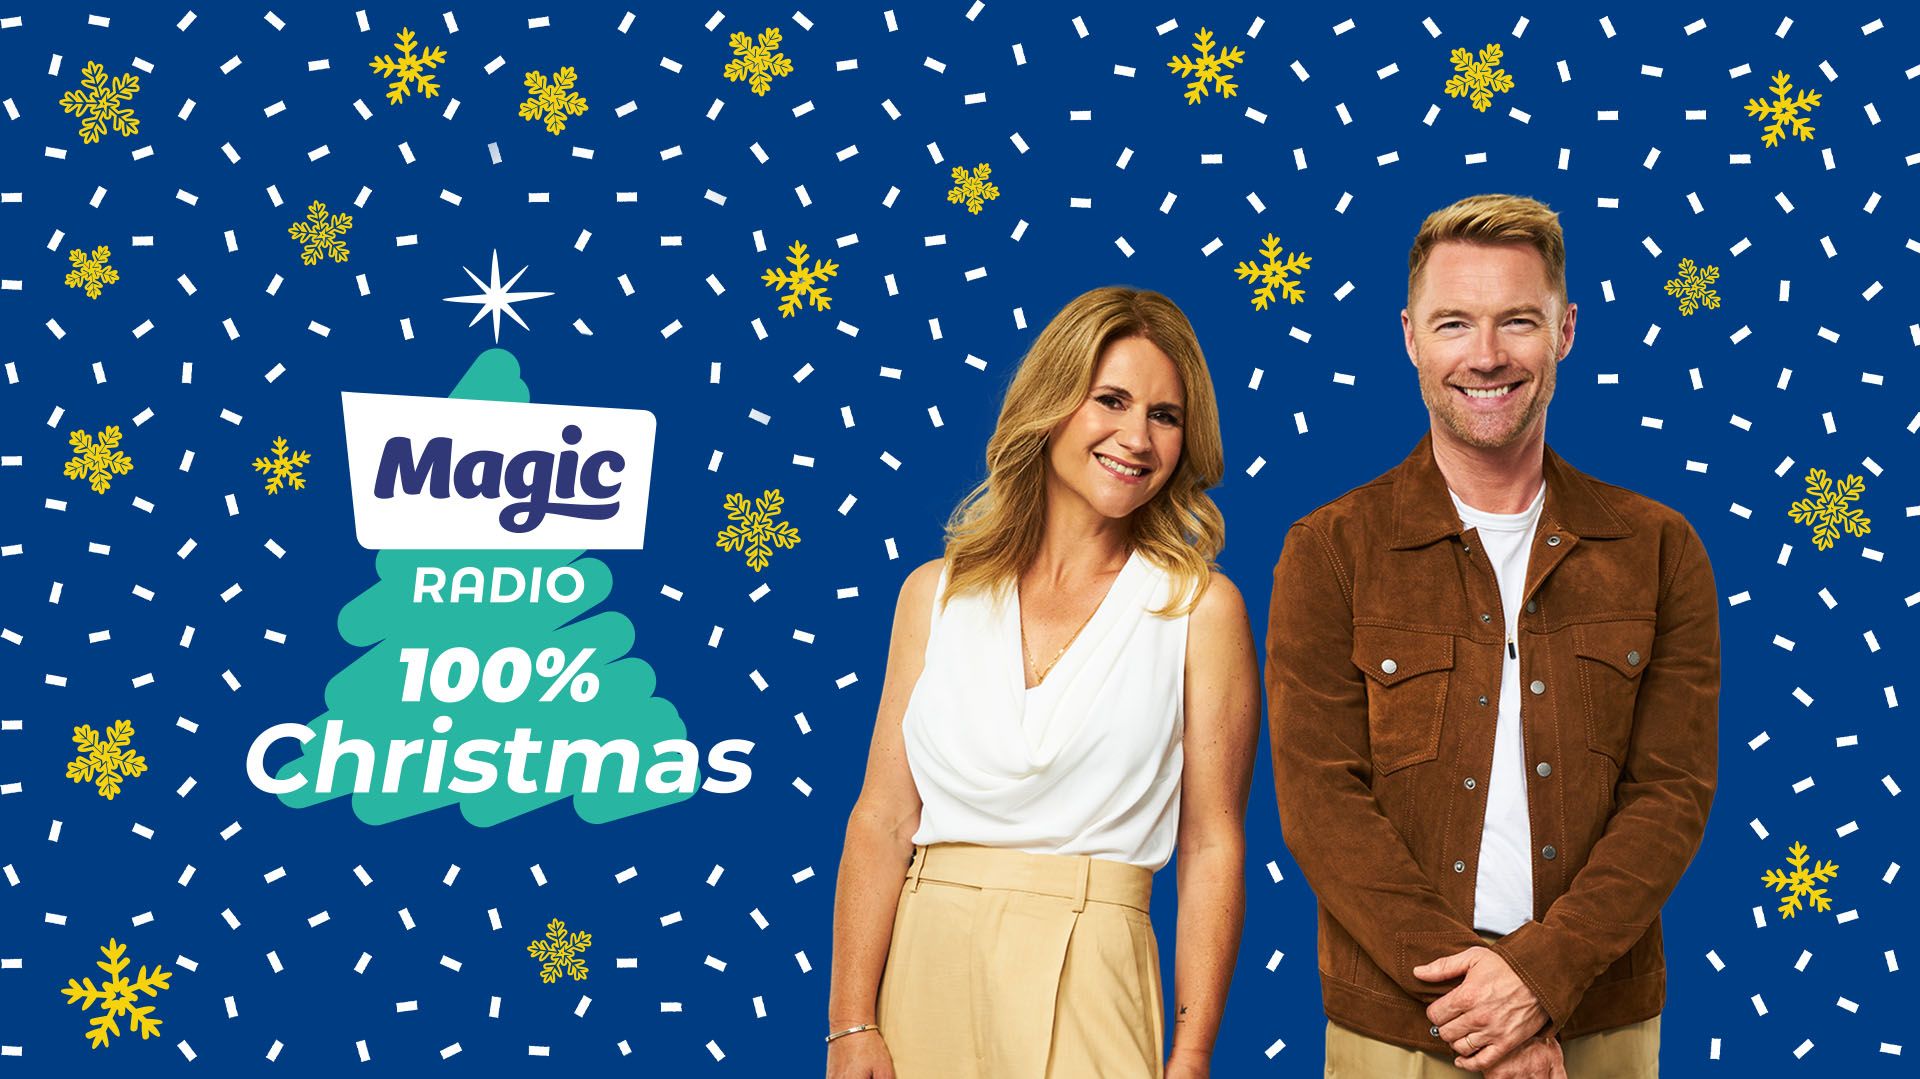 When will Magic Radio go 100% Christmas?